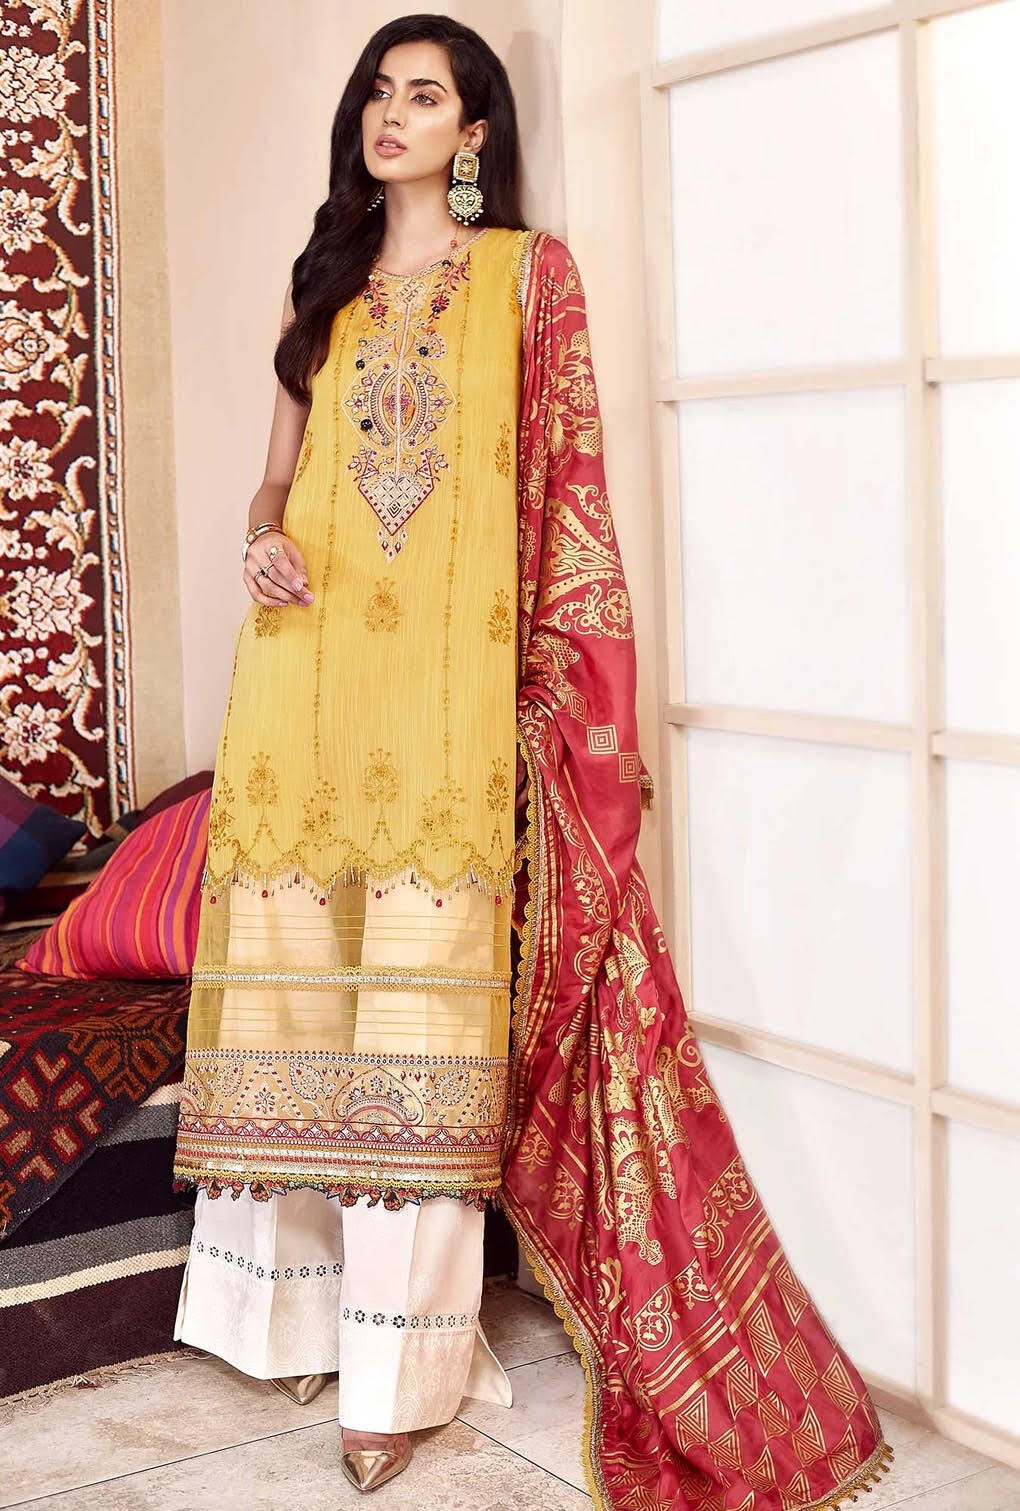 Unstitched Salwar Kameez Combo Sets of 3 Ethnic Leon Punjabi Suit Synthethic 